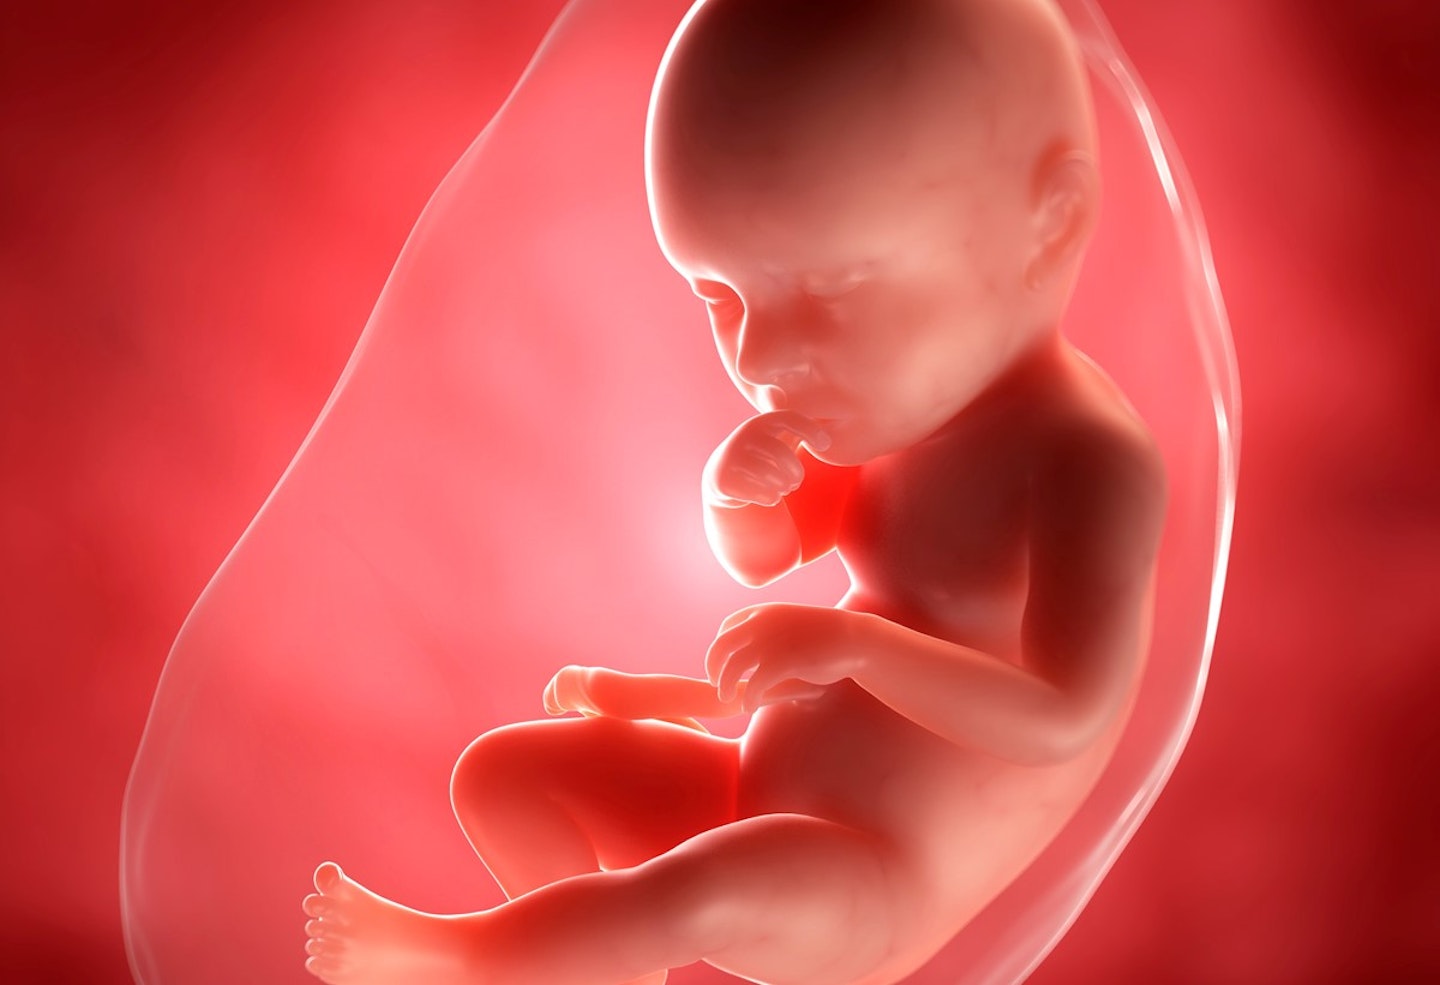 39 Weeks Pregnant: Baby Development, Symptoms & Signs